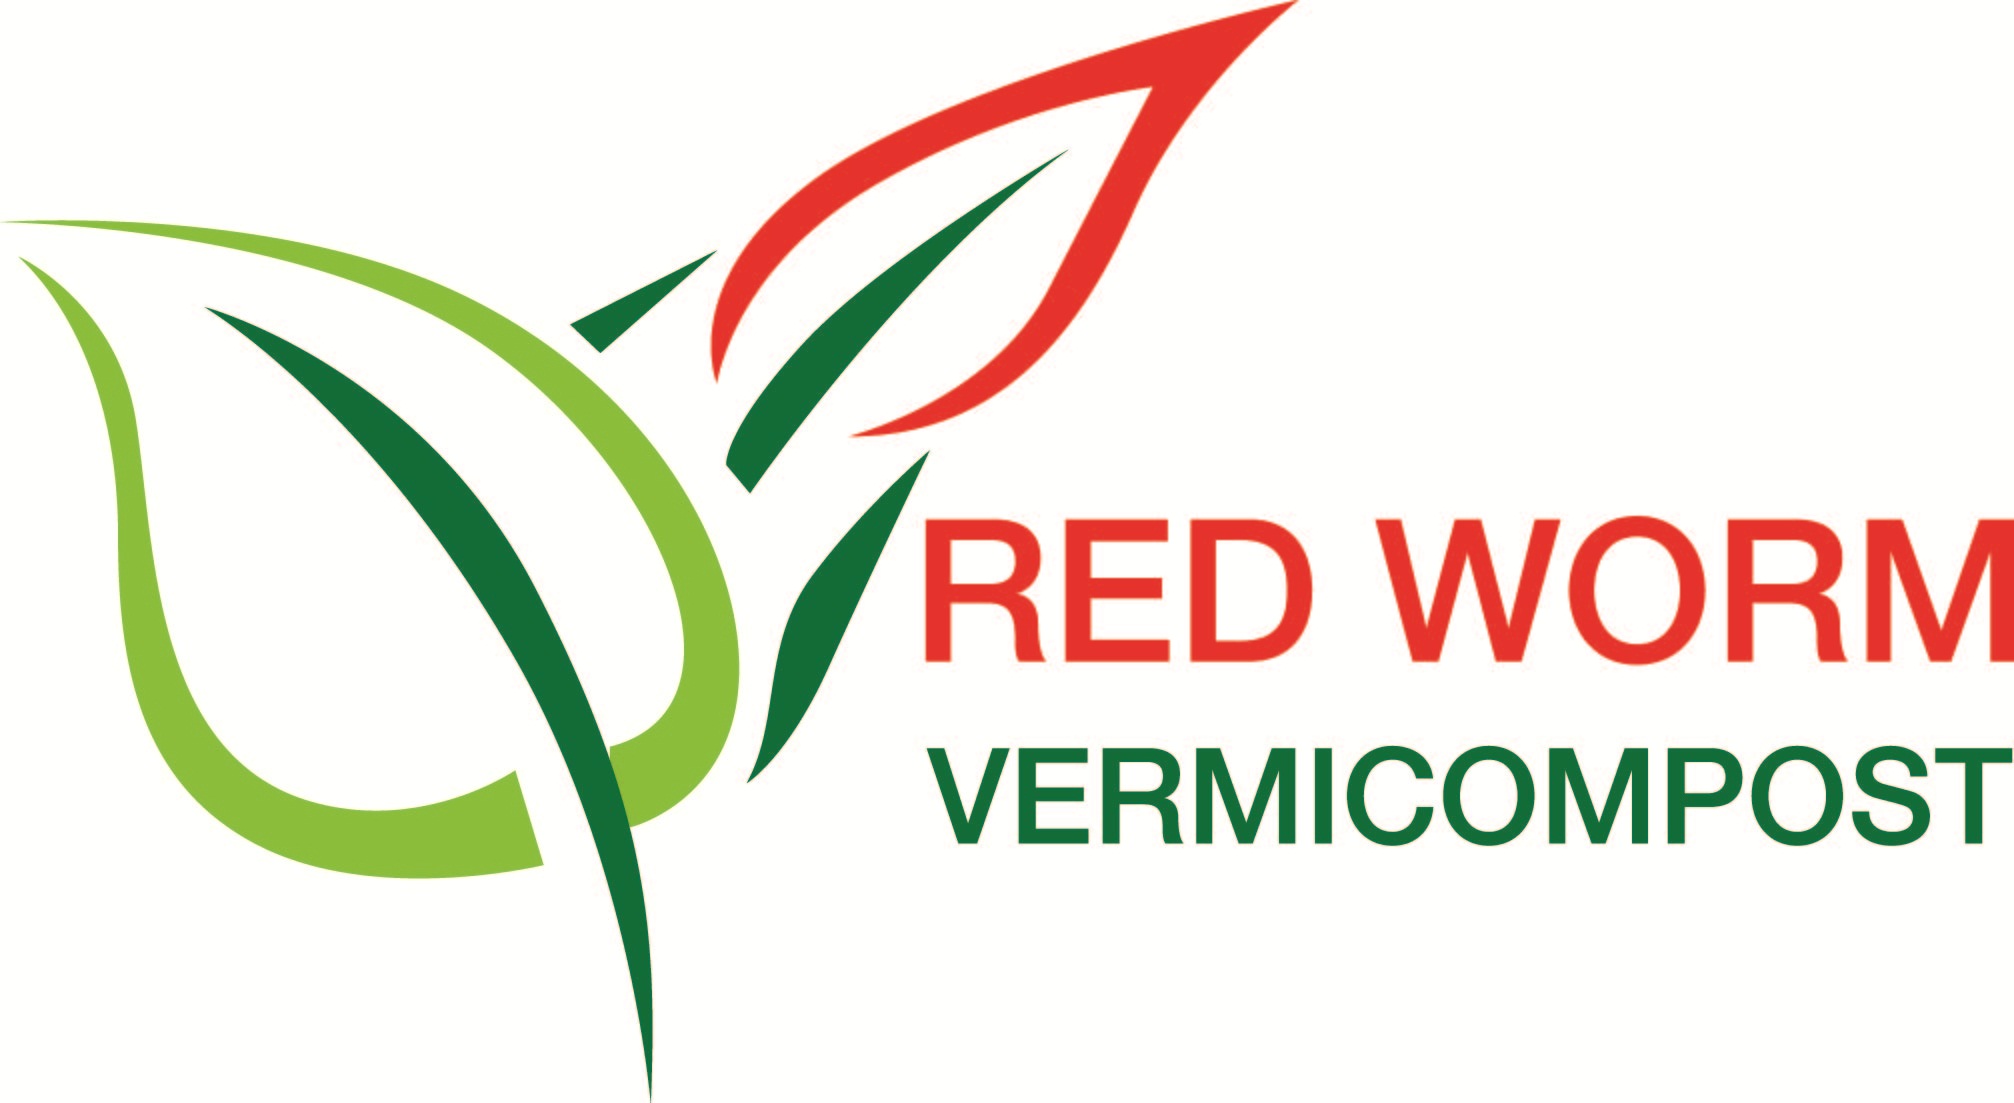 RED WORM VERMICOMPOST